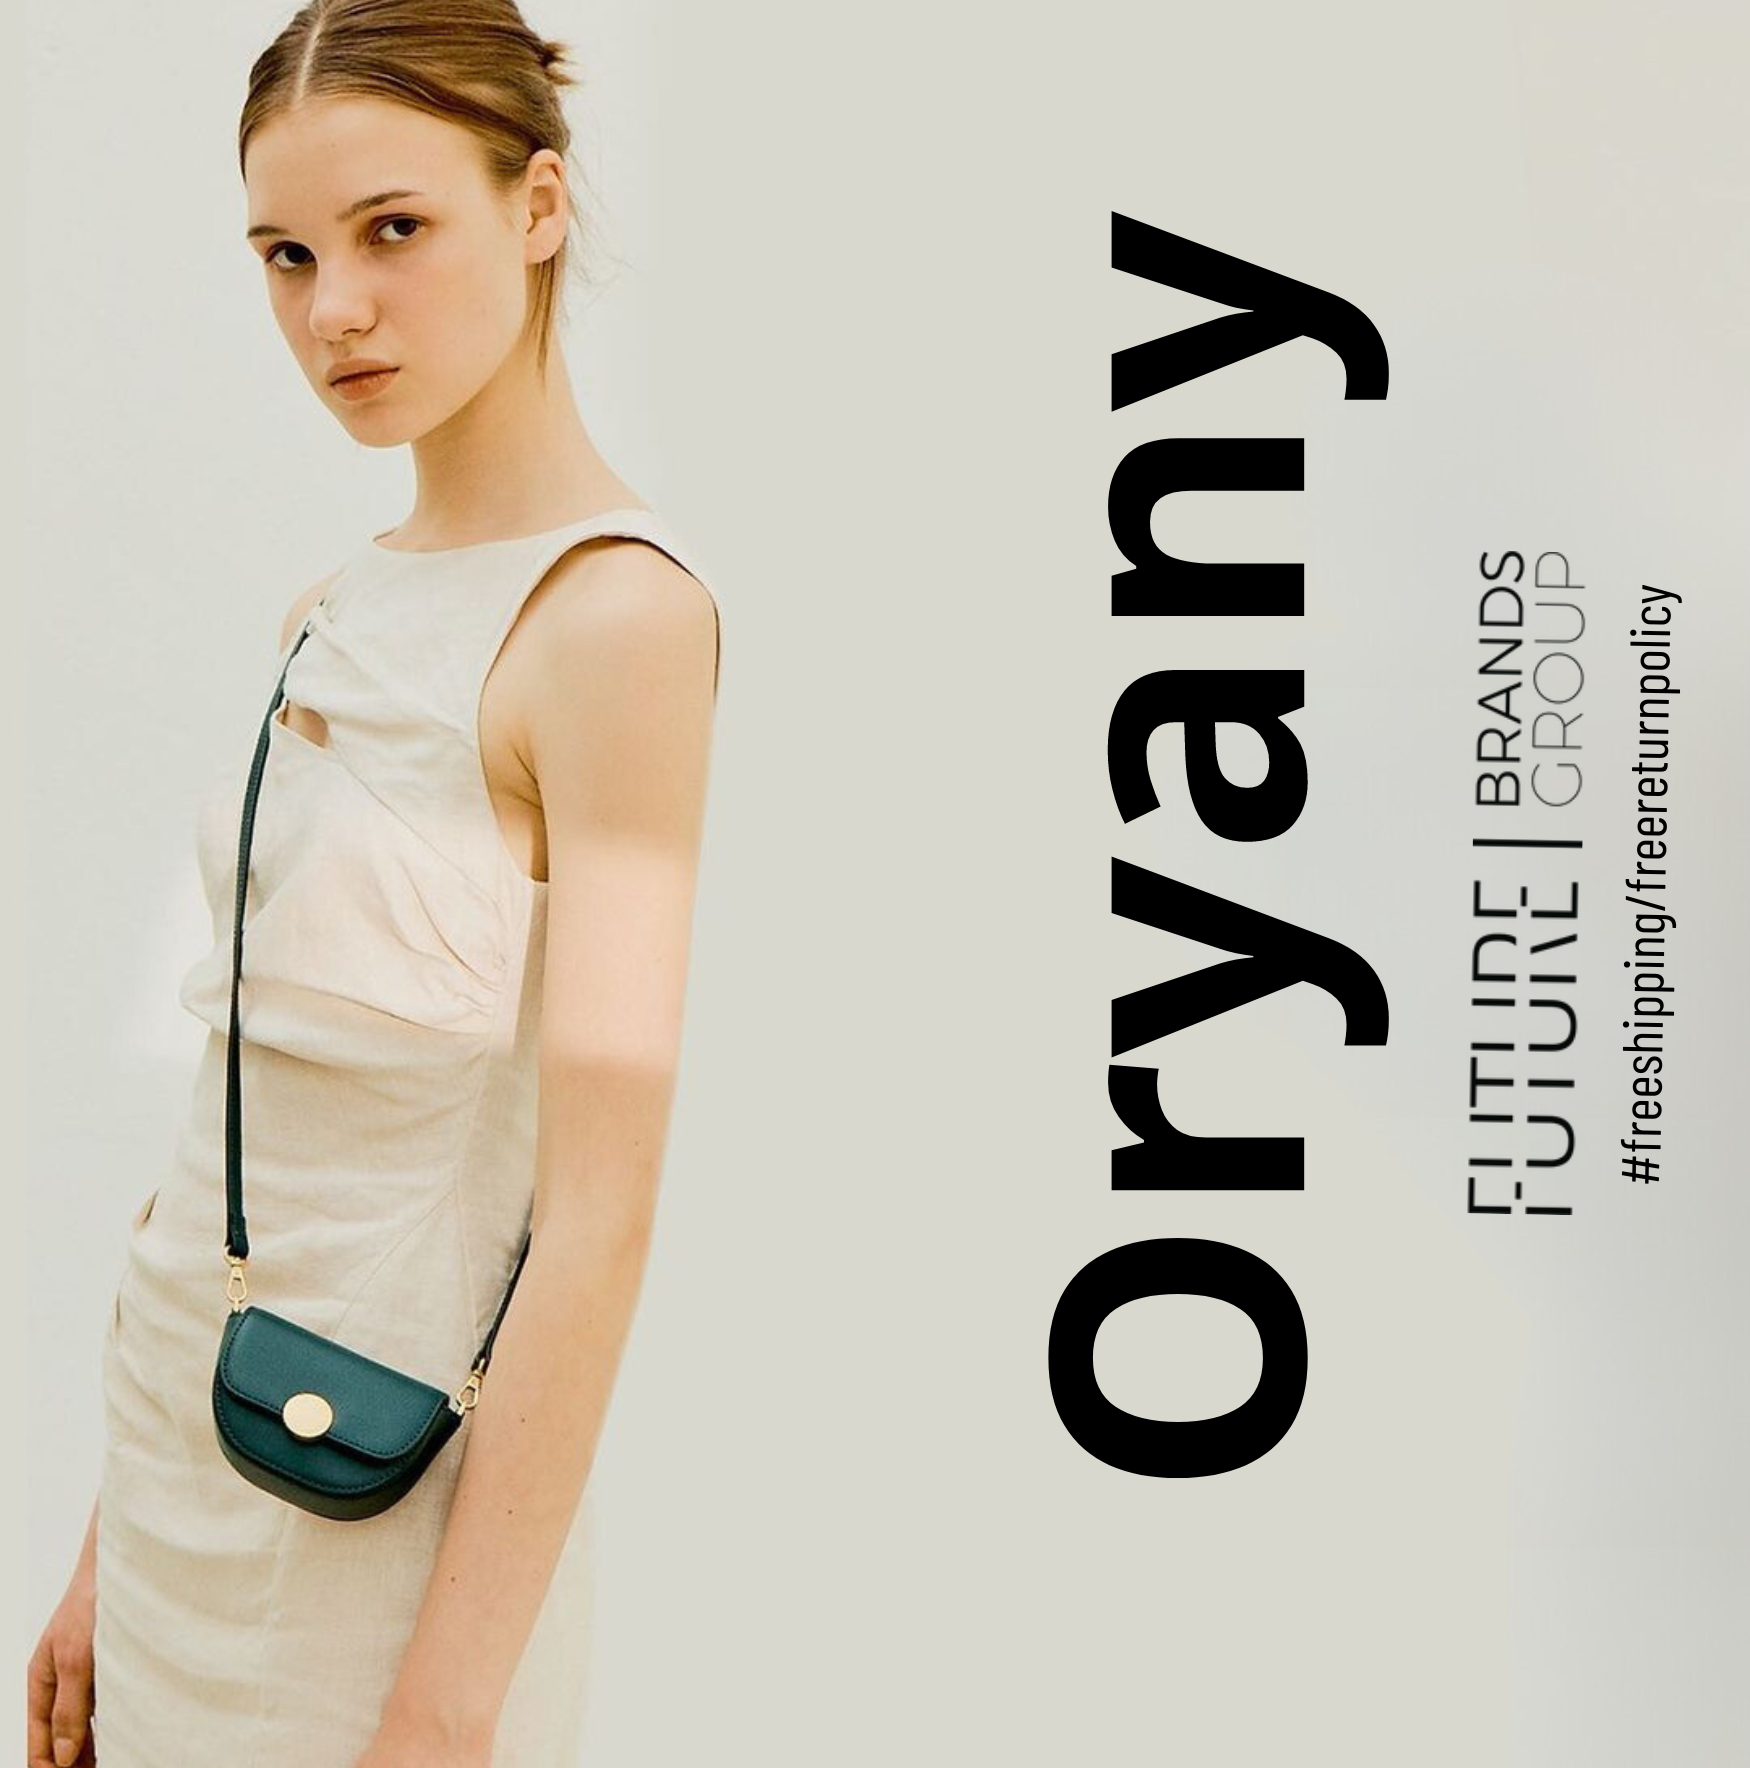 Oryany’s Lottie Mic | Future Brands Group